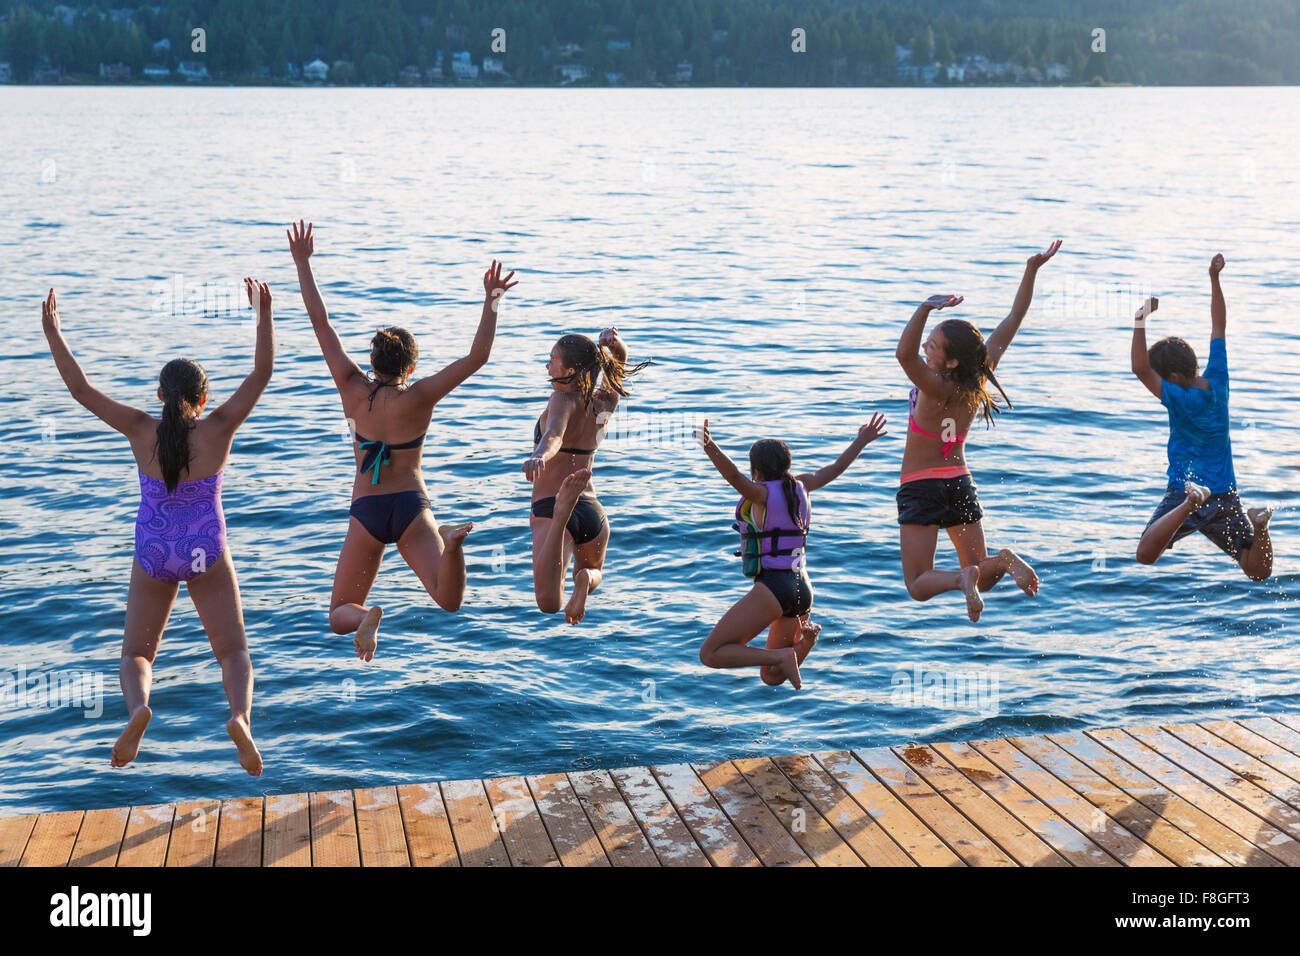 Children jumping into lake Stock Photo